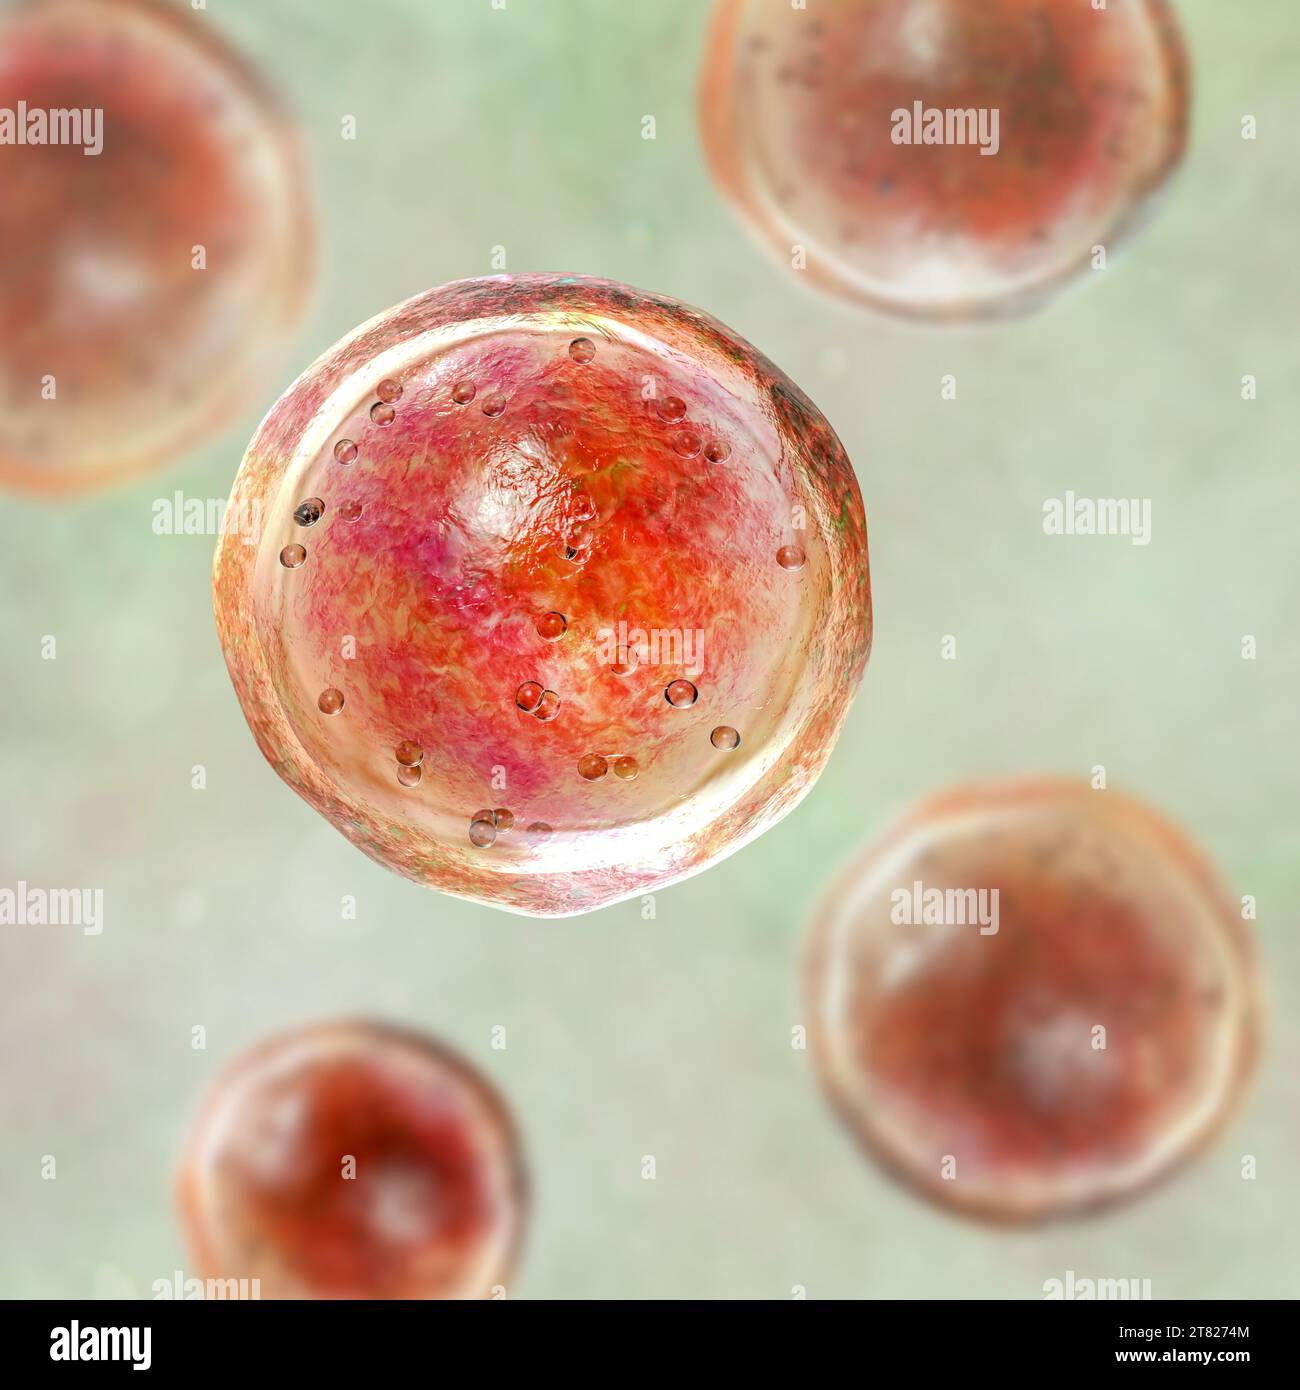 Emmonsia pathogene Pilze, Illustration Stockfoto